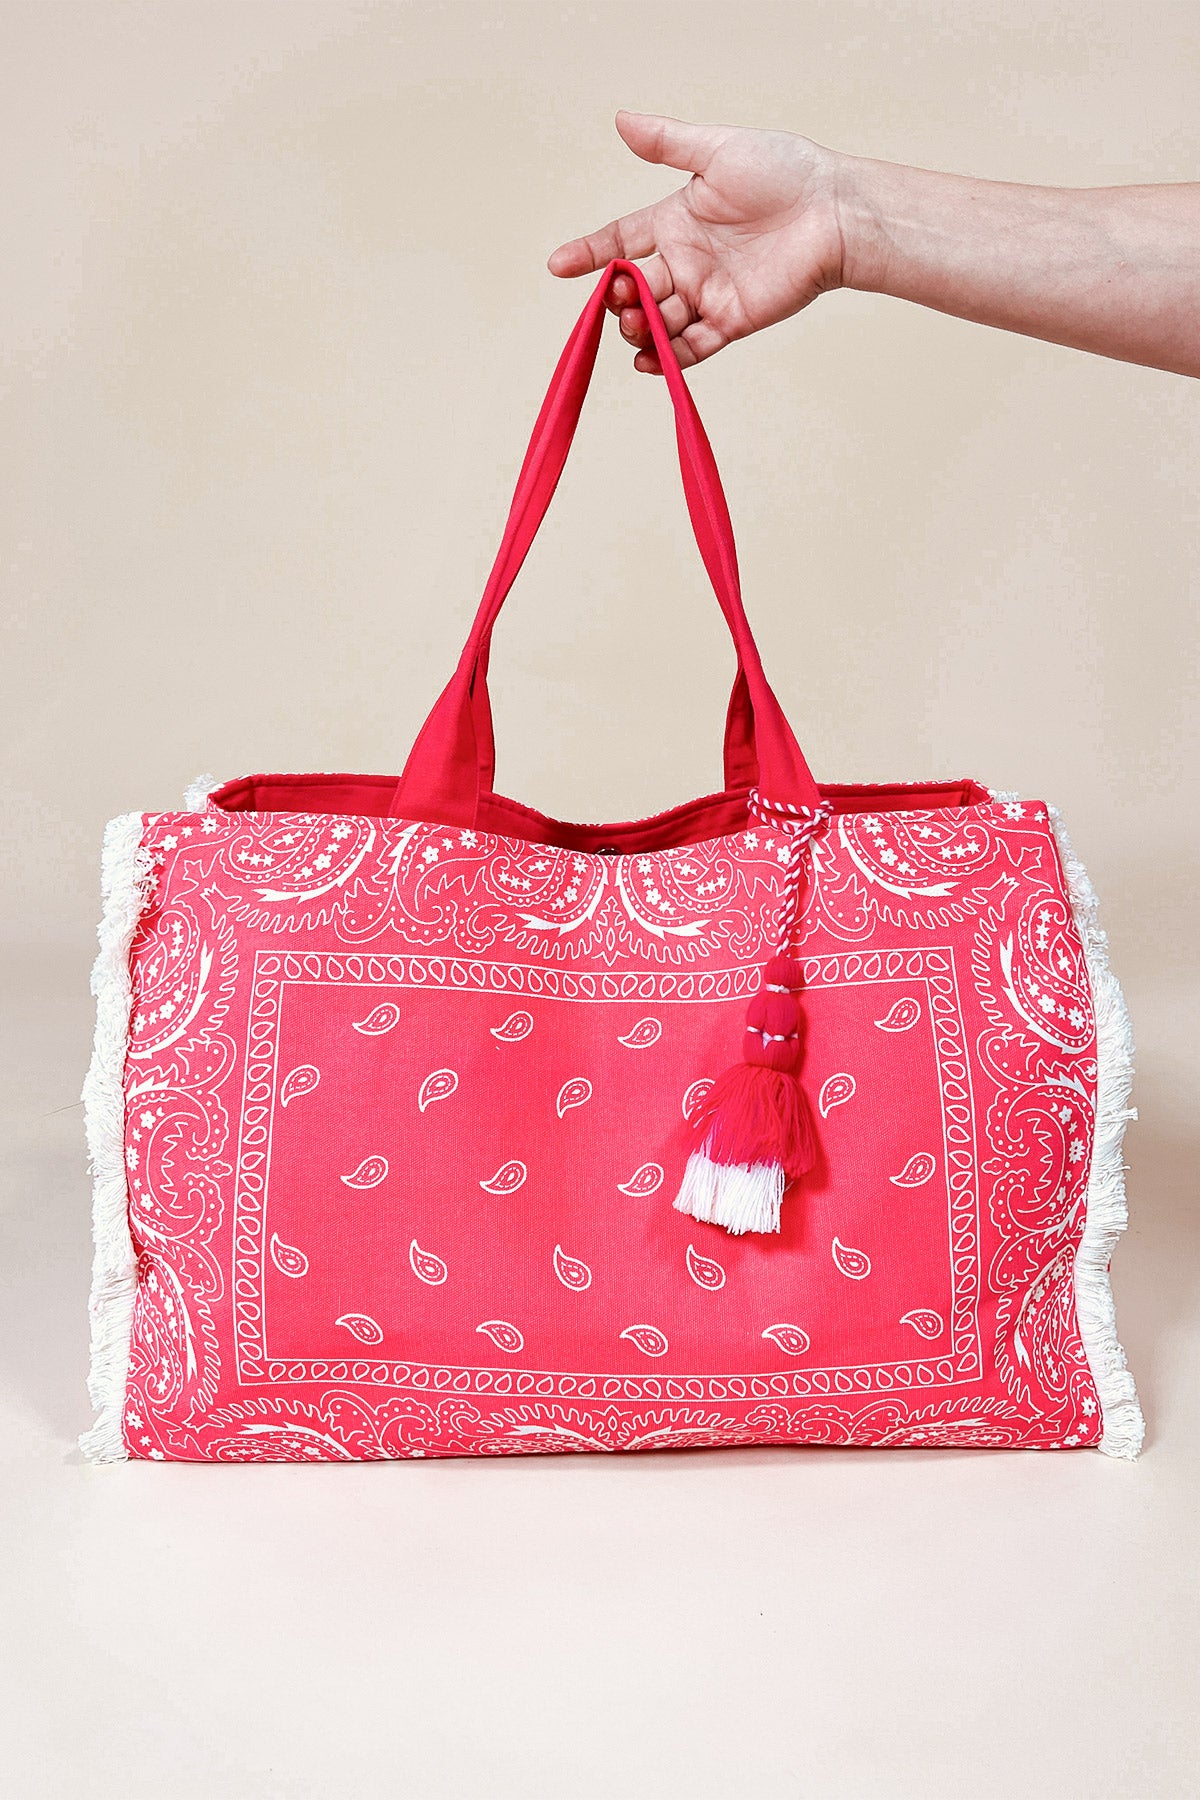 Bandana Bag Pink